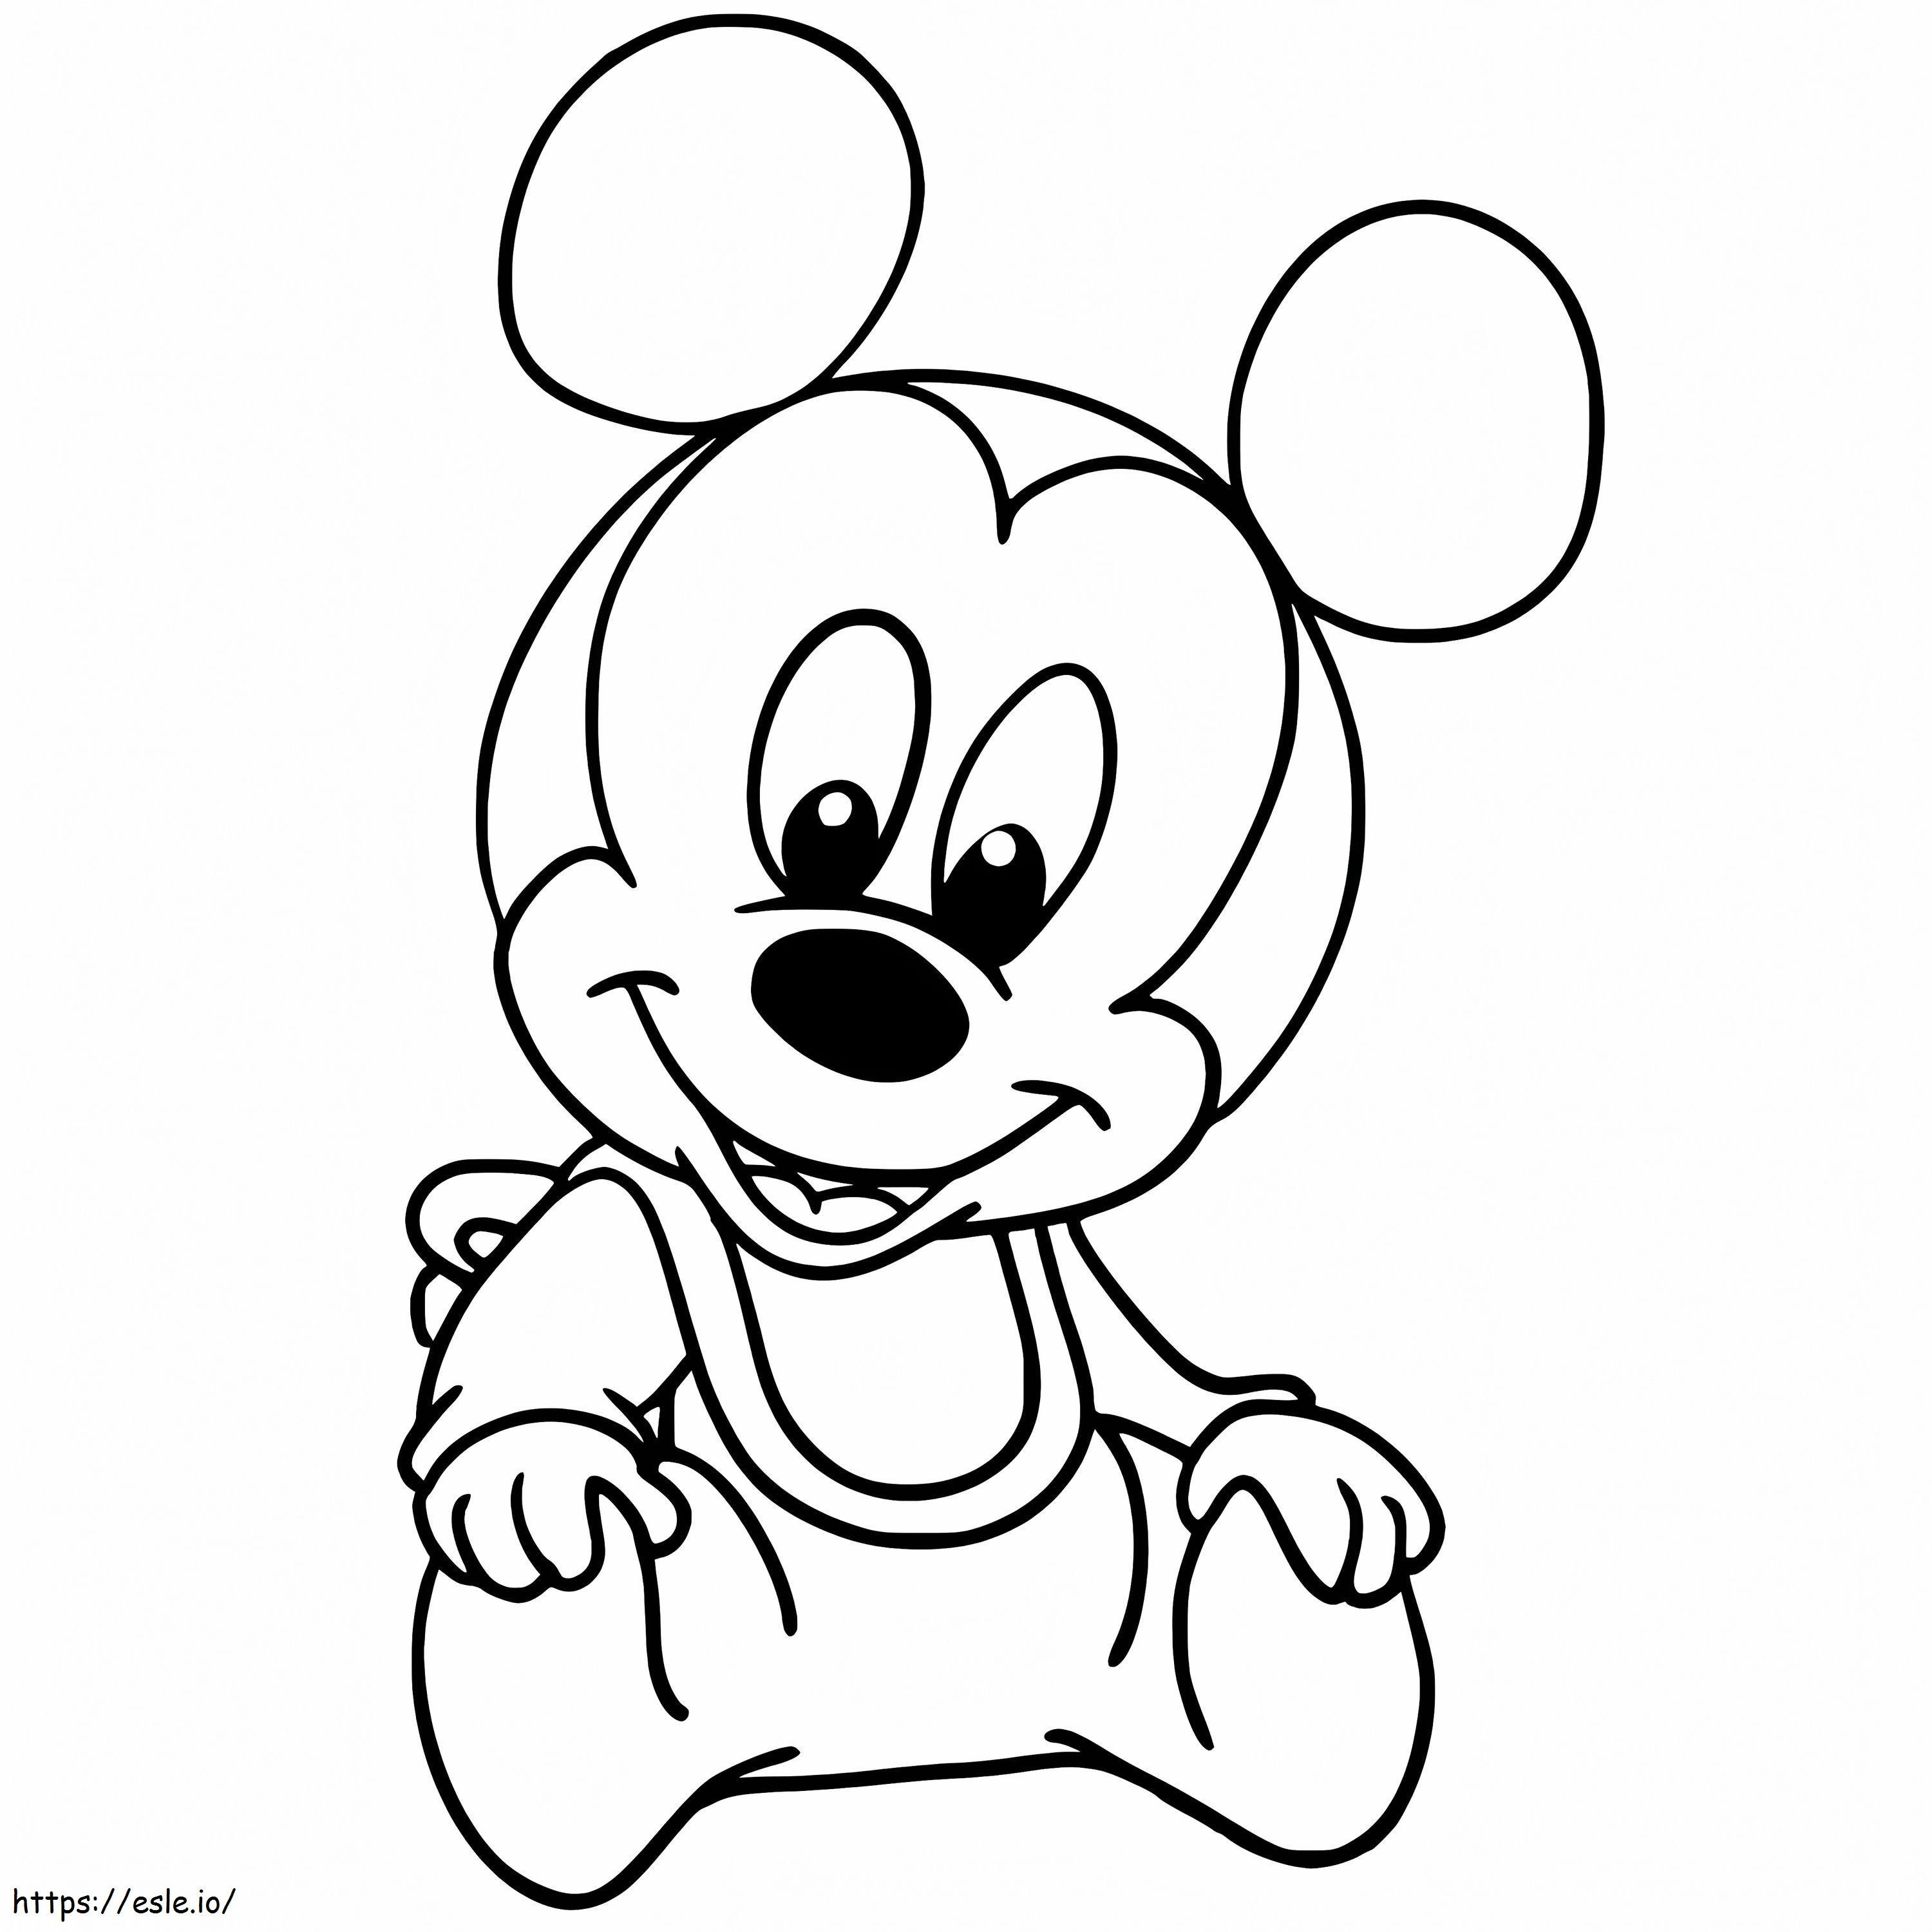 Disney Baby Mickey coloring page